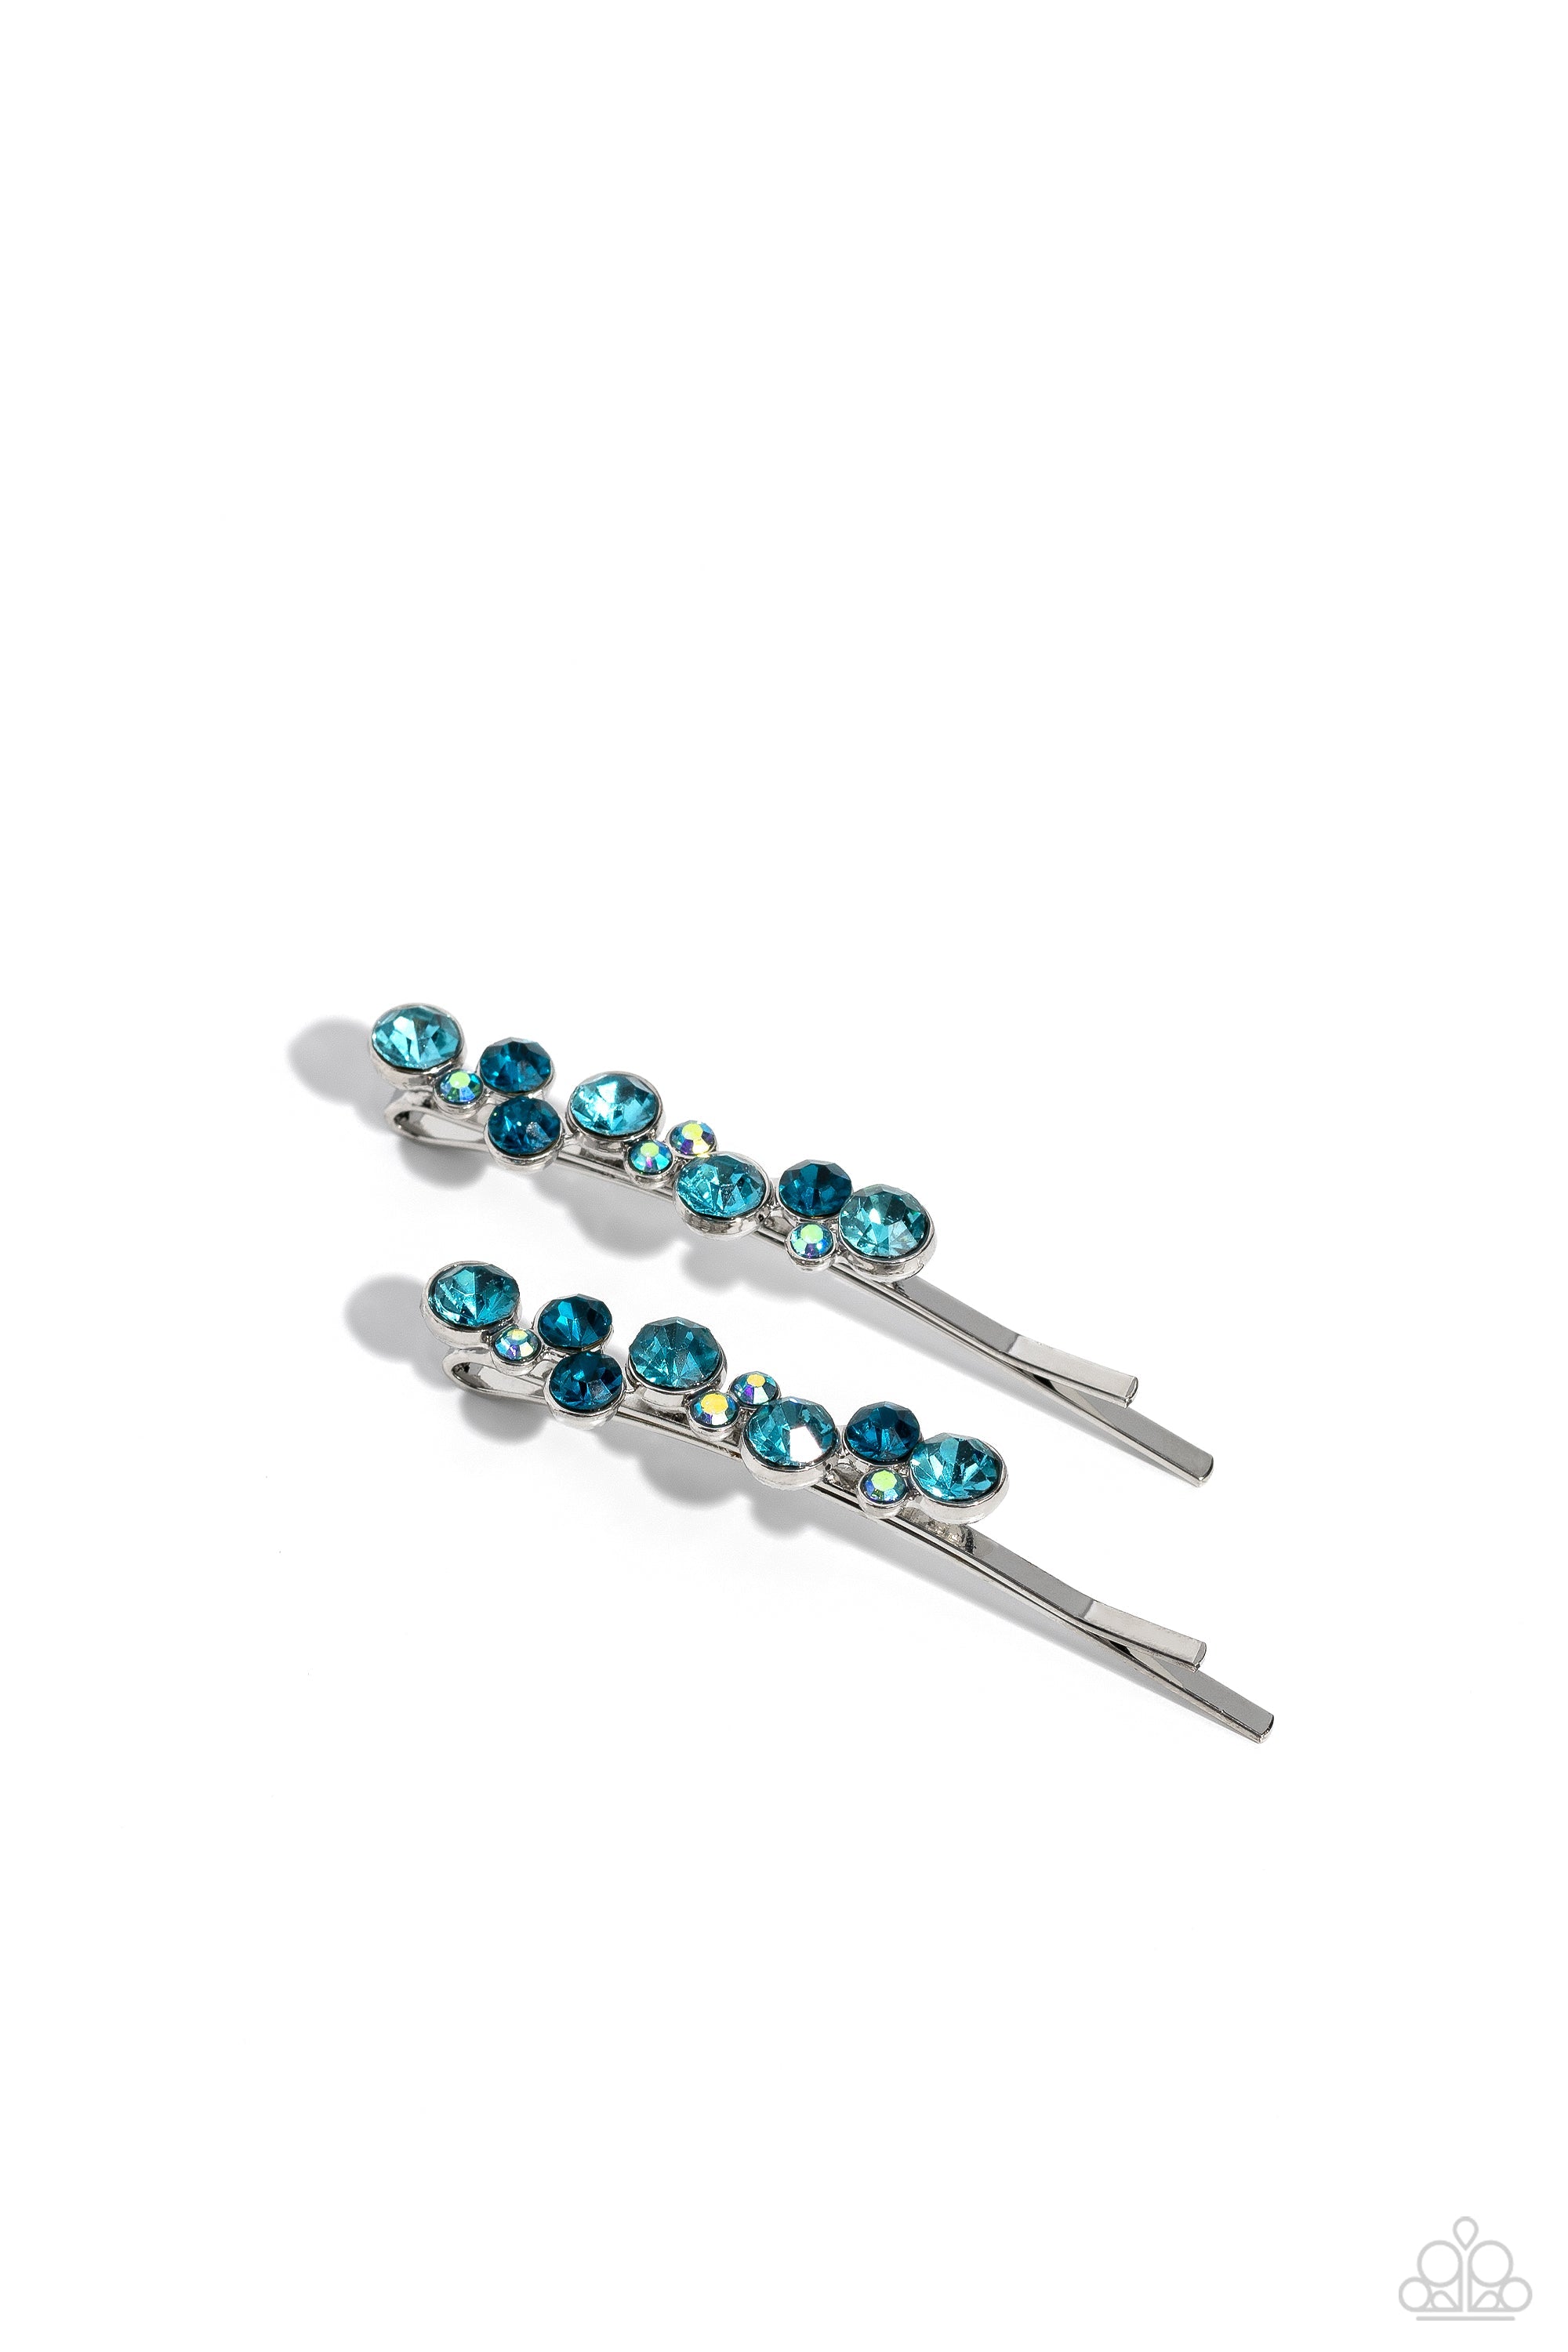 Bubbly Ballroom Blue Rhinestone Hair Pins - Paparazzi Accessories- lightbox - CarasShop.com - $5 Jewelry by Cara Jewels